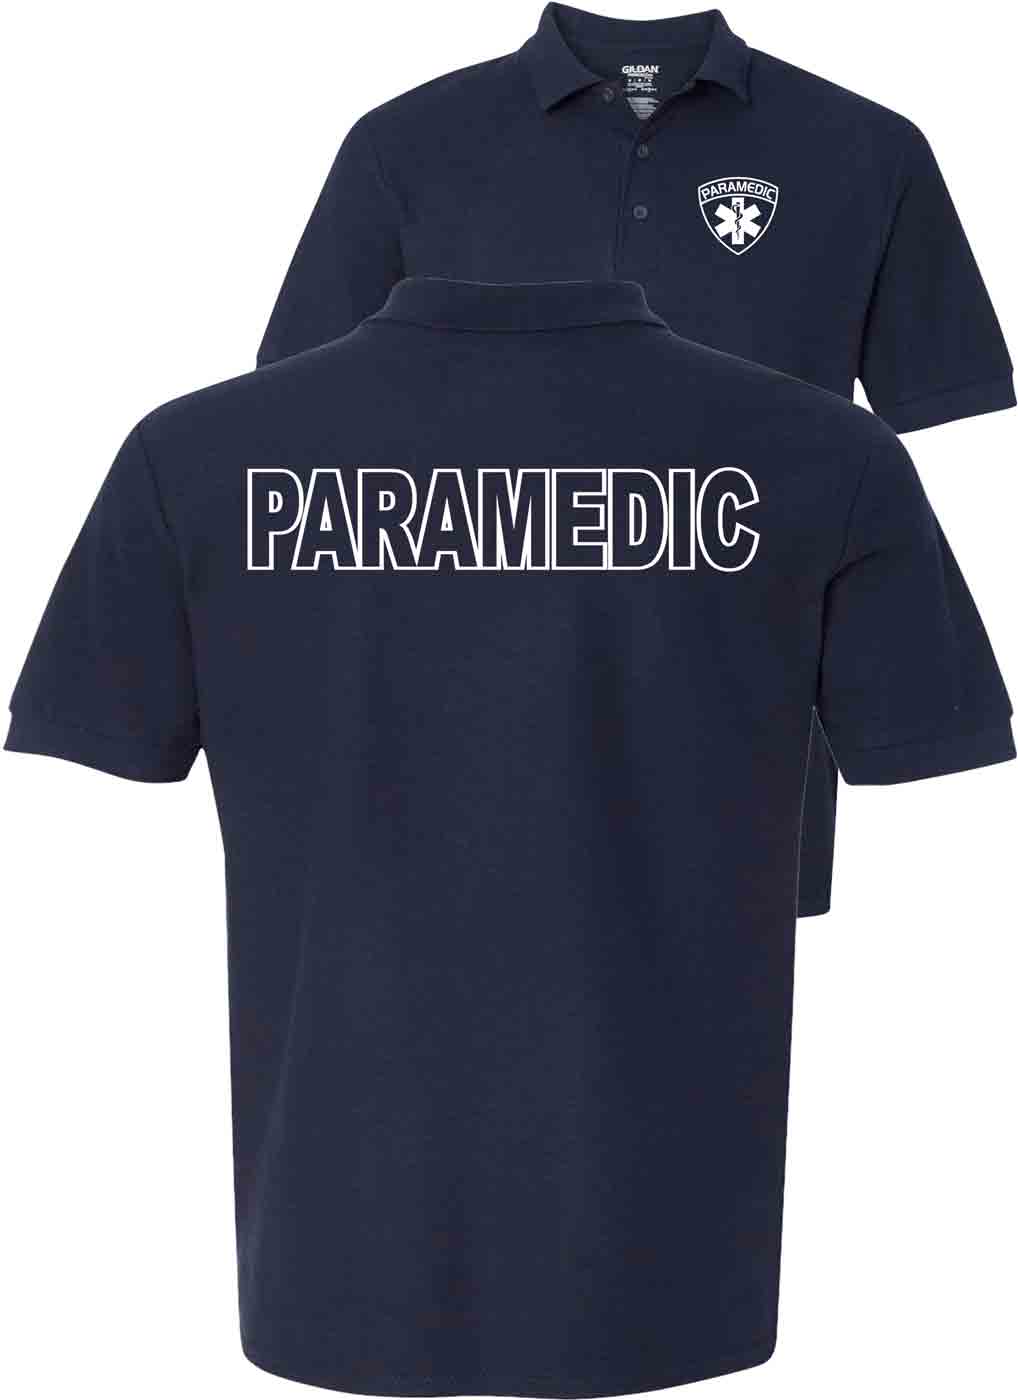 paramedic-polo-short1.jpg